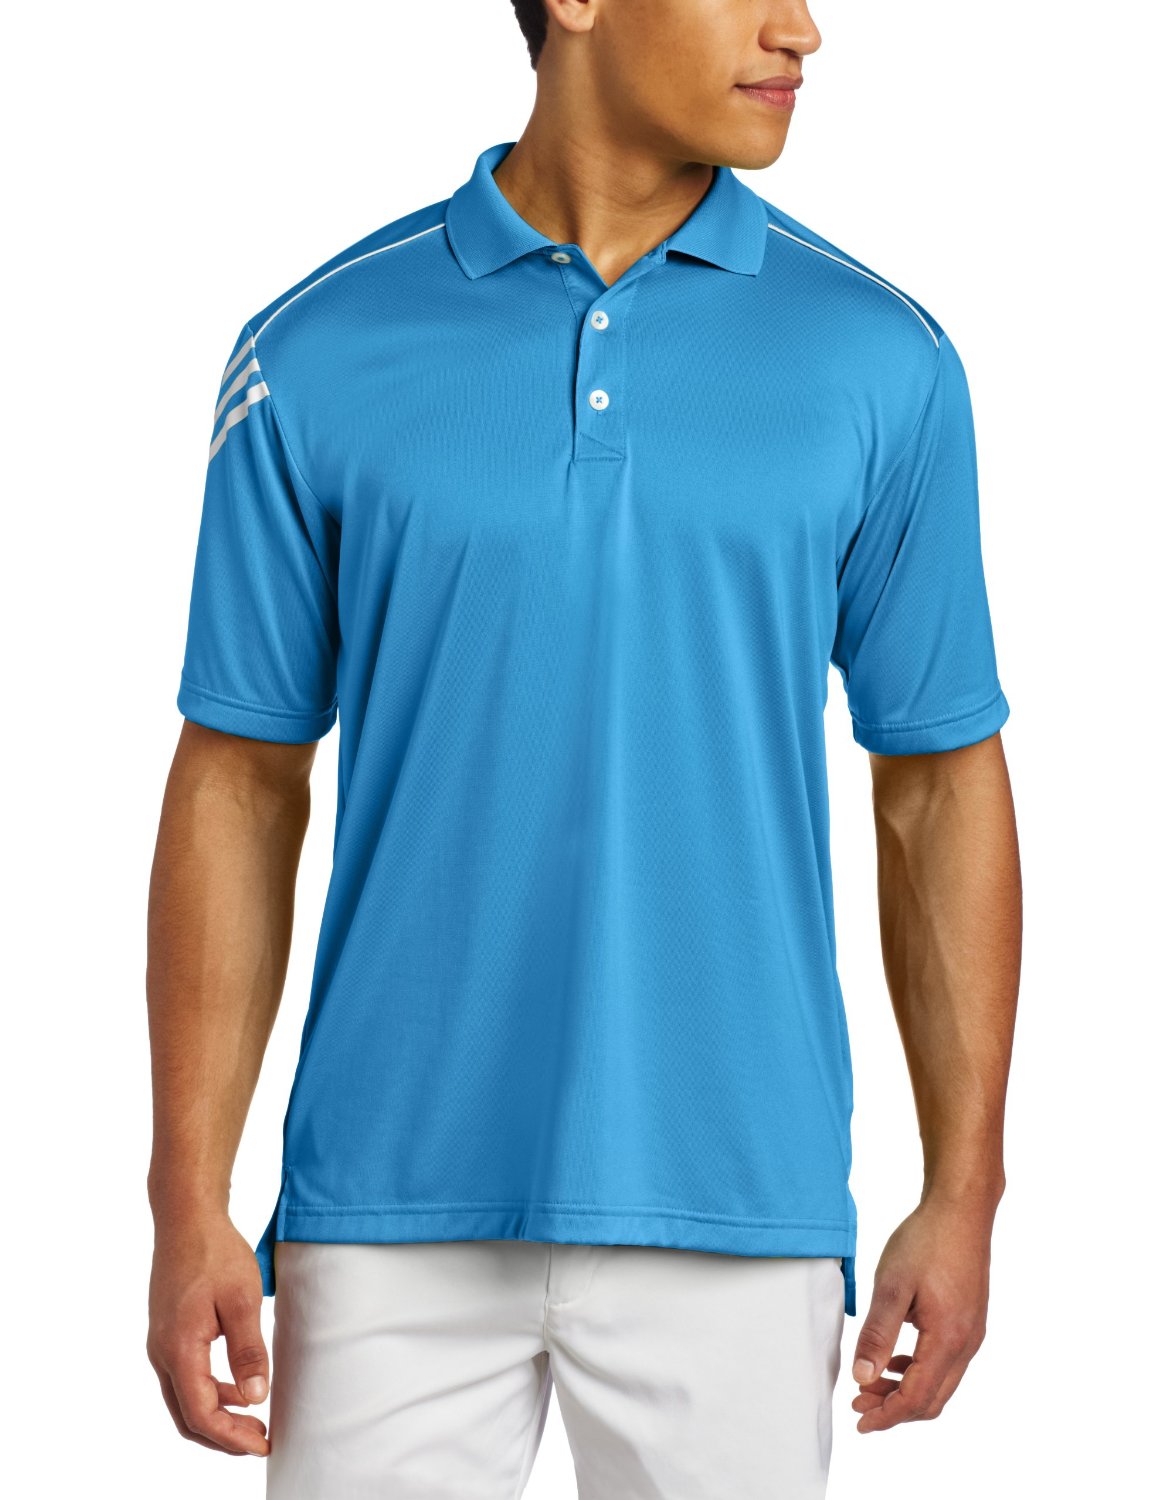 Adidas Mens Golf Shirts